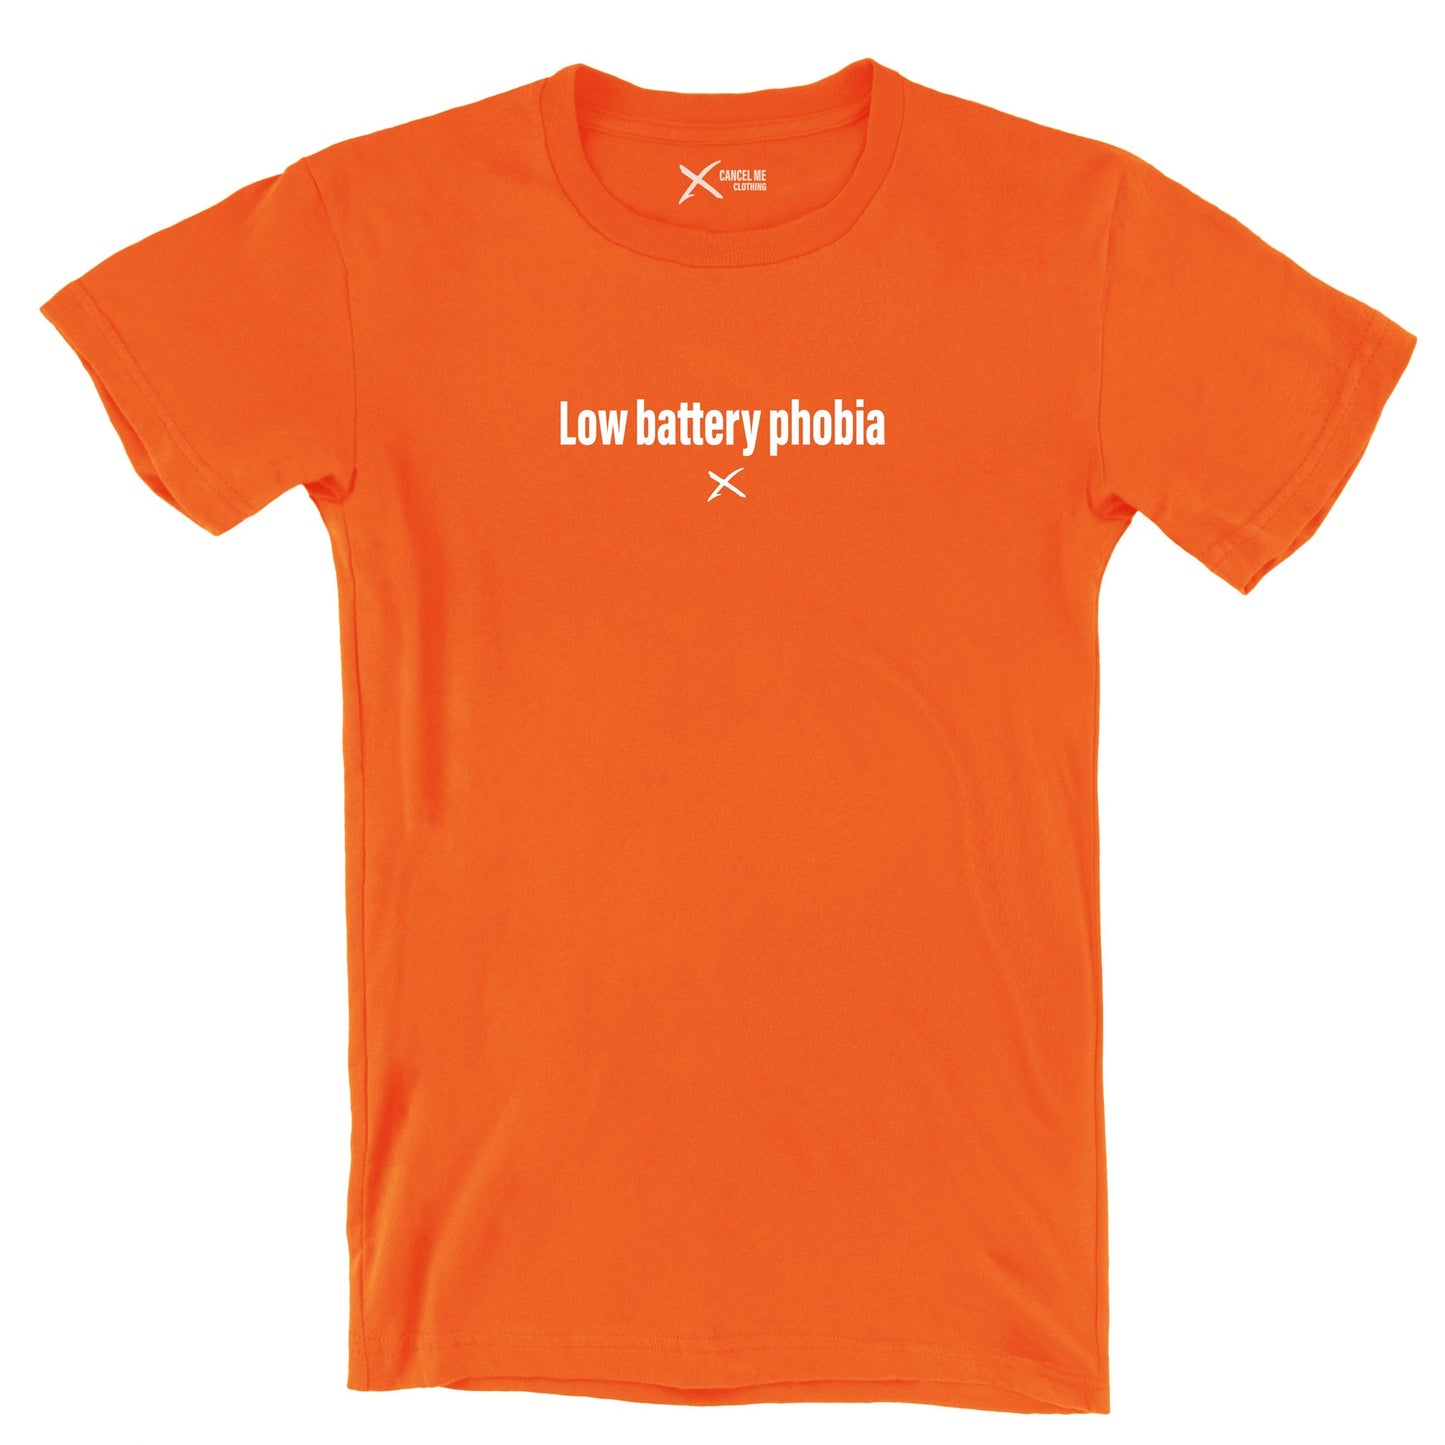 Low battery phobia - Shirt